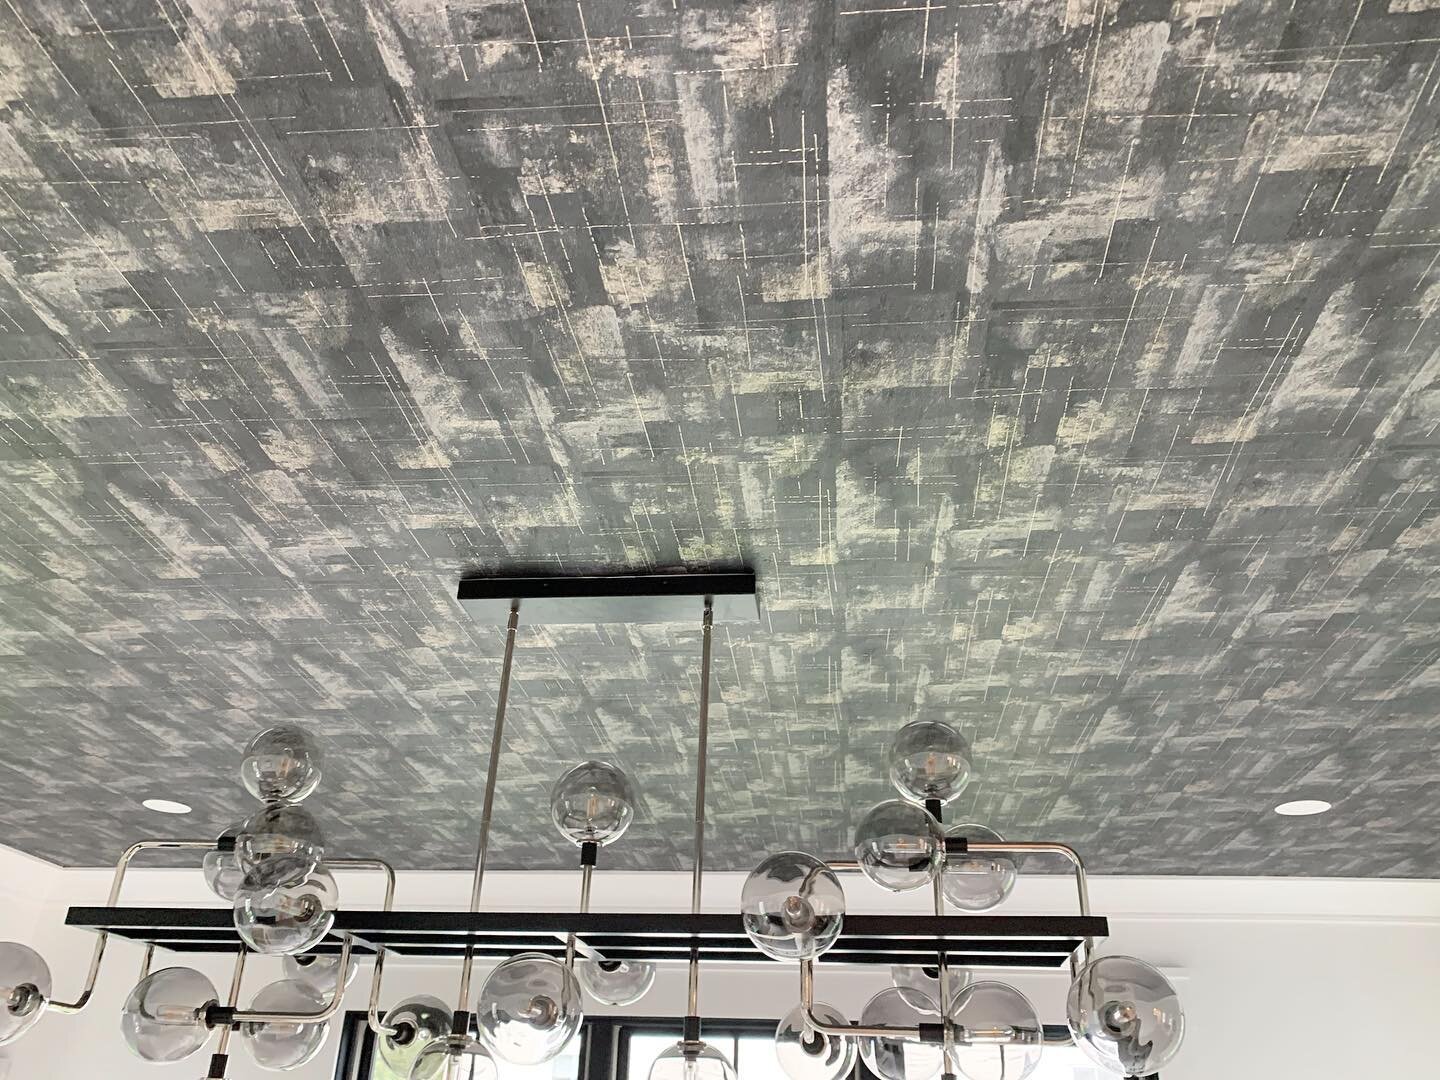 Dining room drama on #wallpaperwednesday with this fabulous dark metallic paper 🖤
@nina_seed_interiors 
#ilovemyclients 
.
.
.
.
#interiors #interiordesign #design #decor #interiordesigner #bostondesigner #newenglanddesign #newenglandhome #newenglan